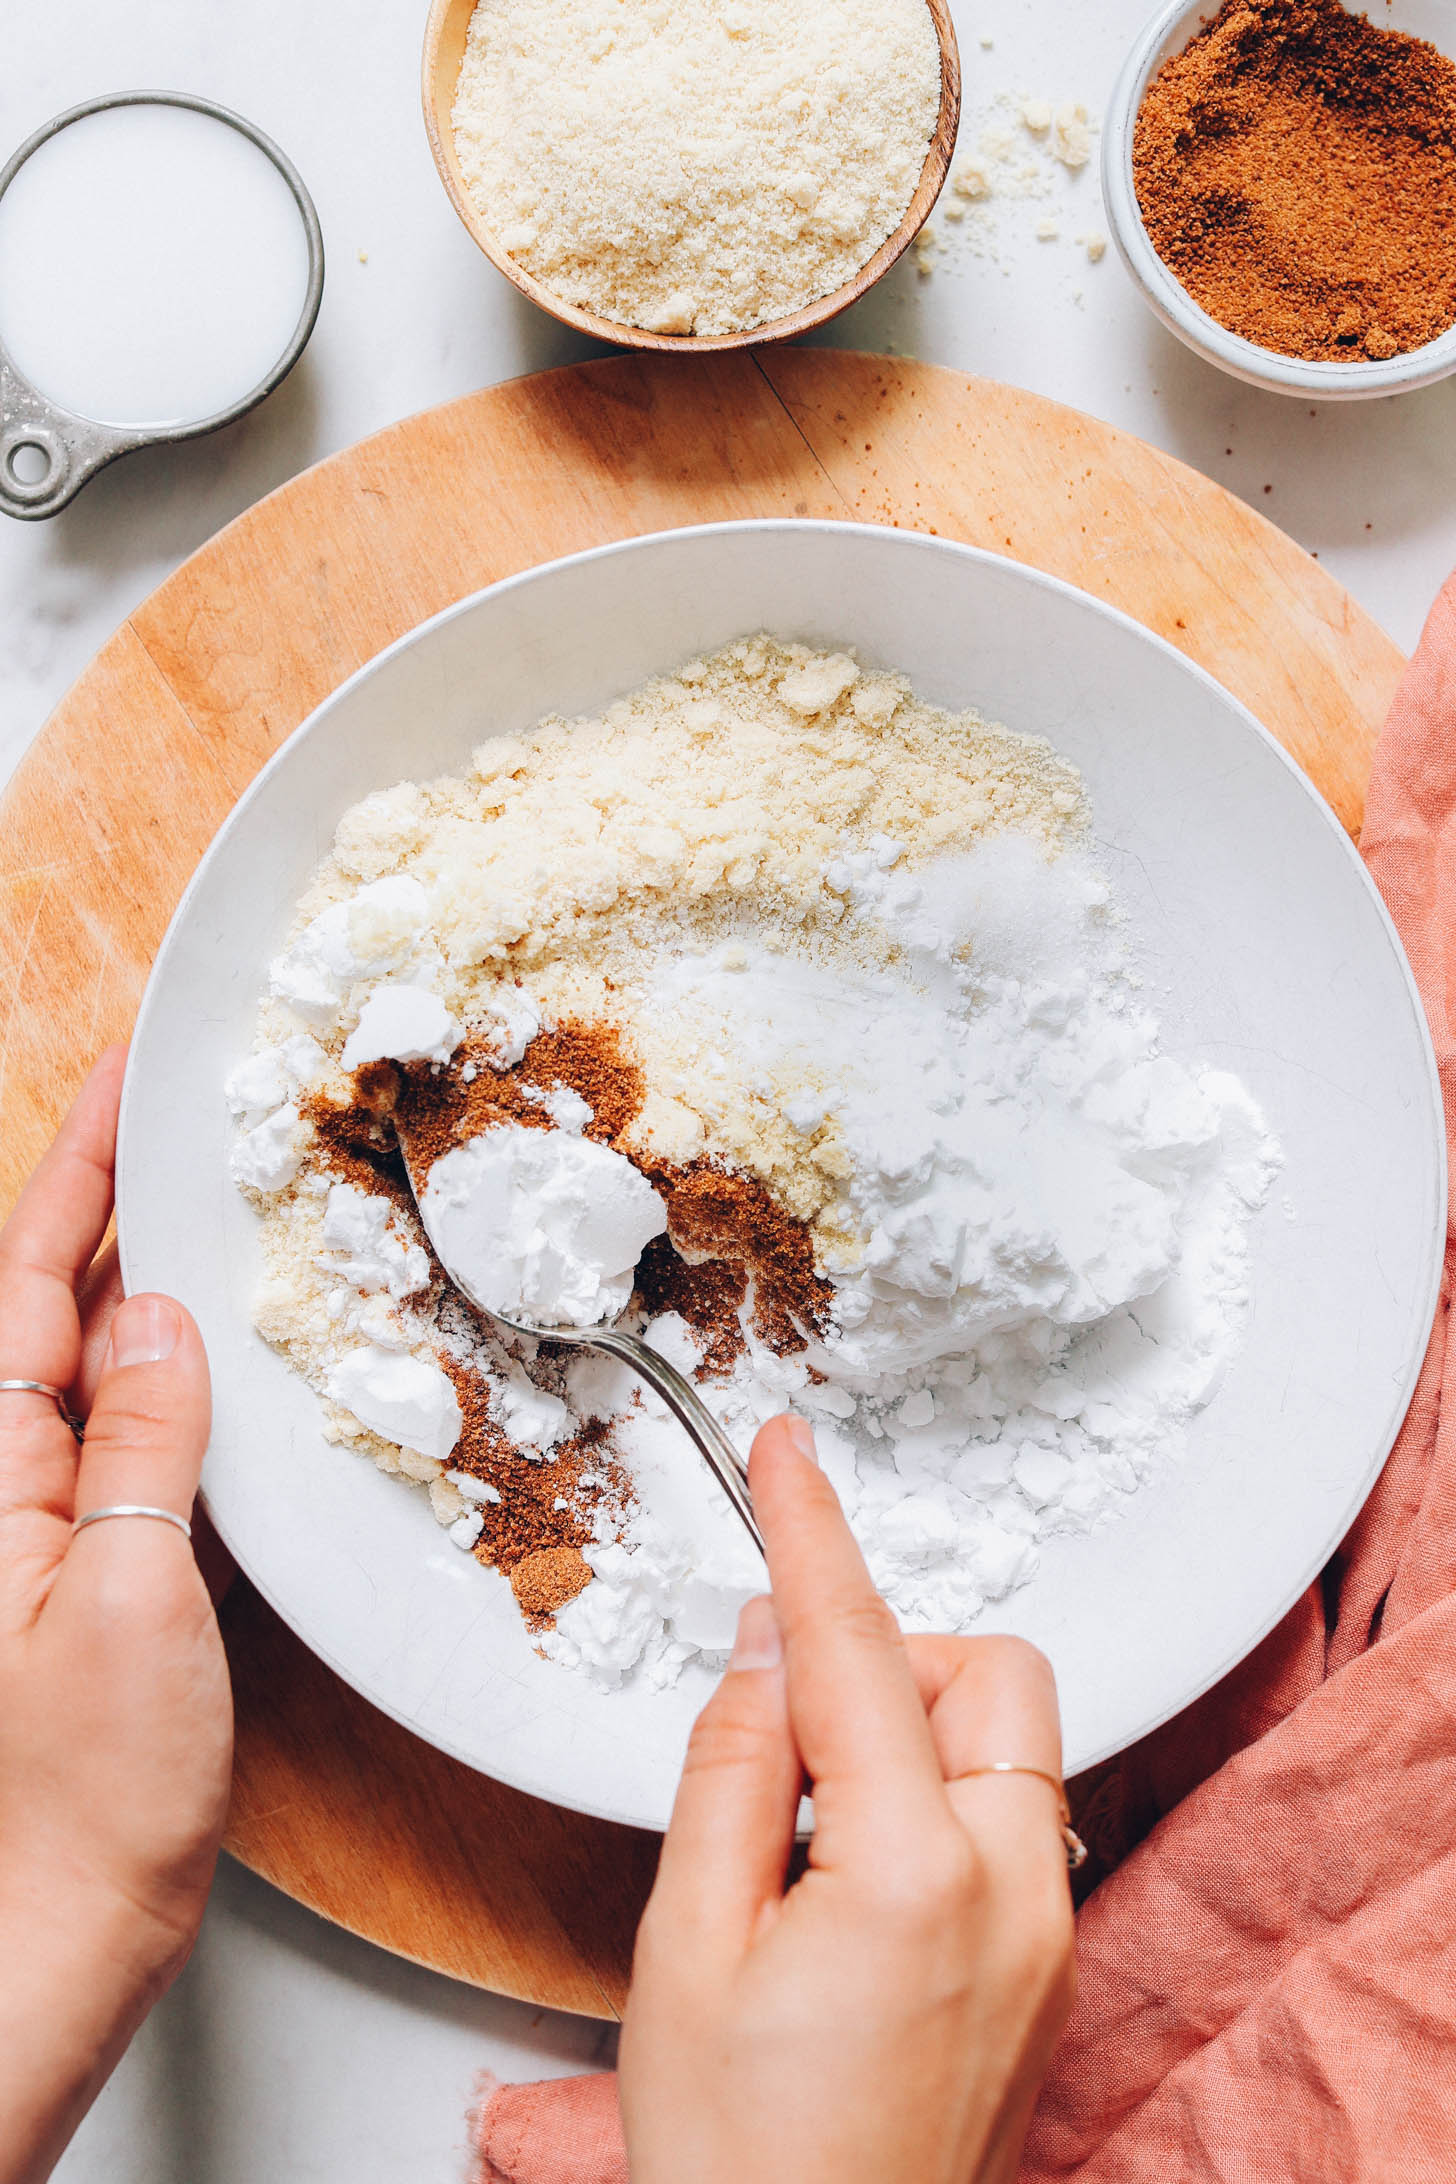 Mixing almond flour, potato starch, coconut sugar, salt, and baking powder in a bowl